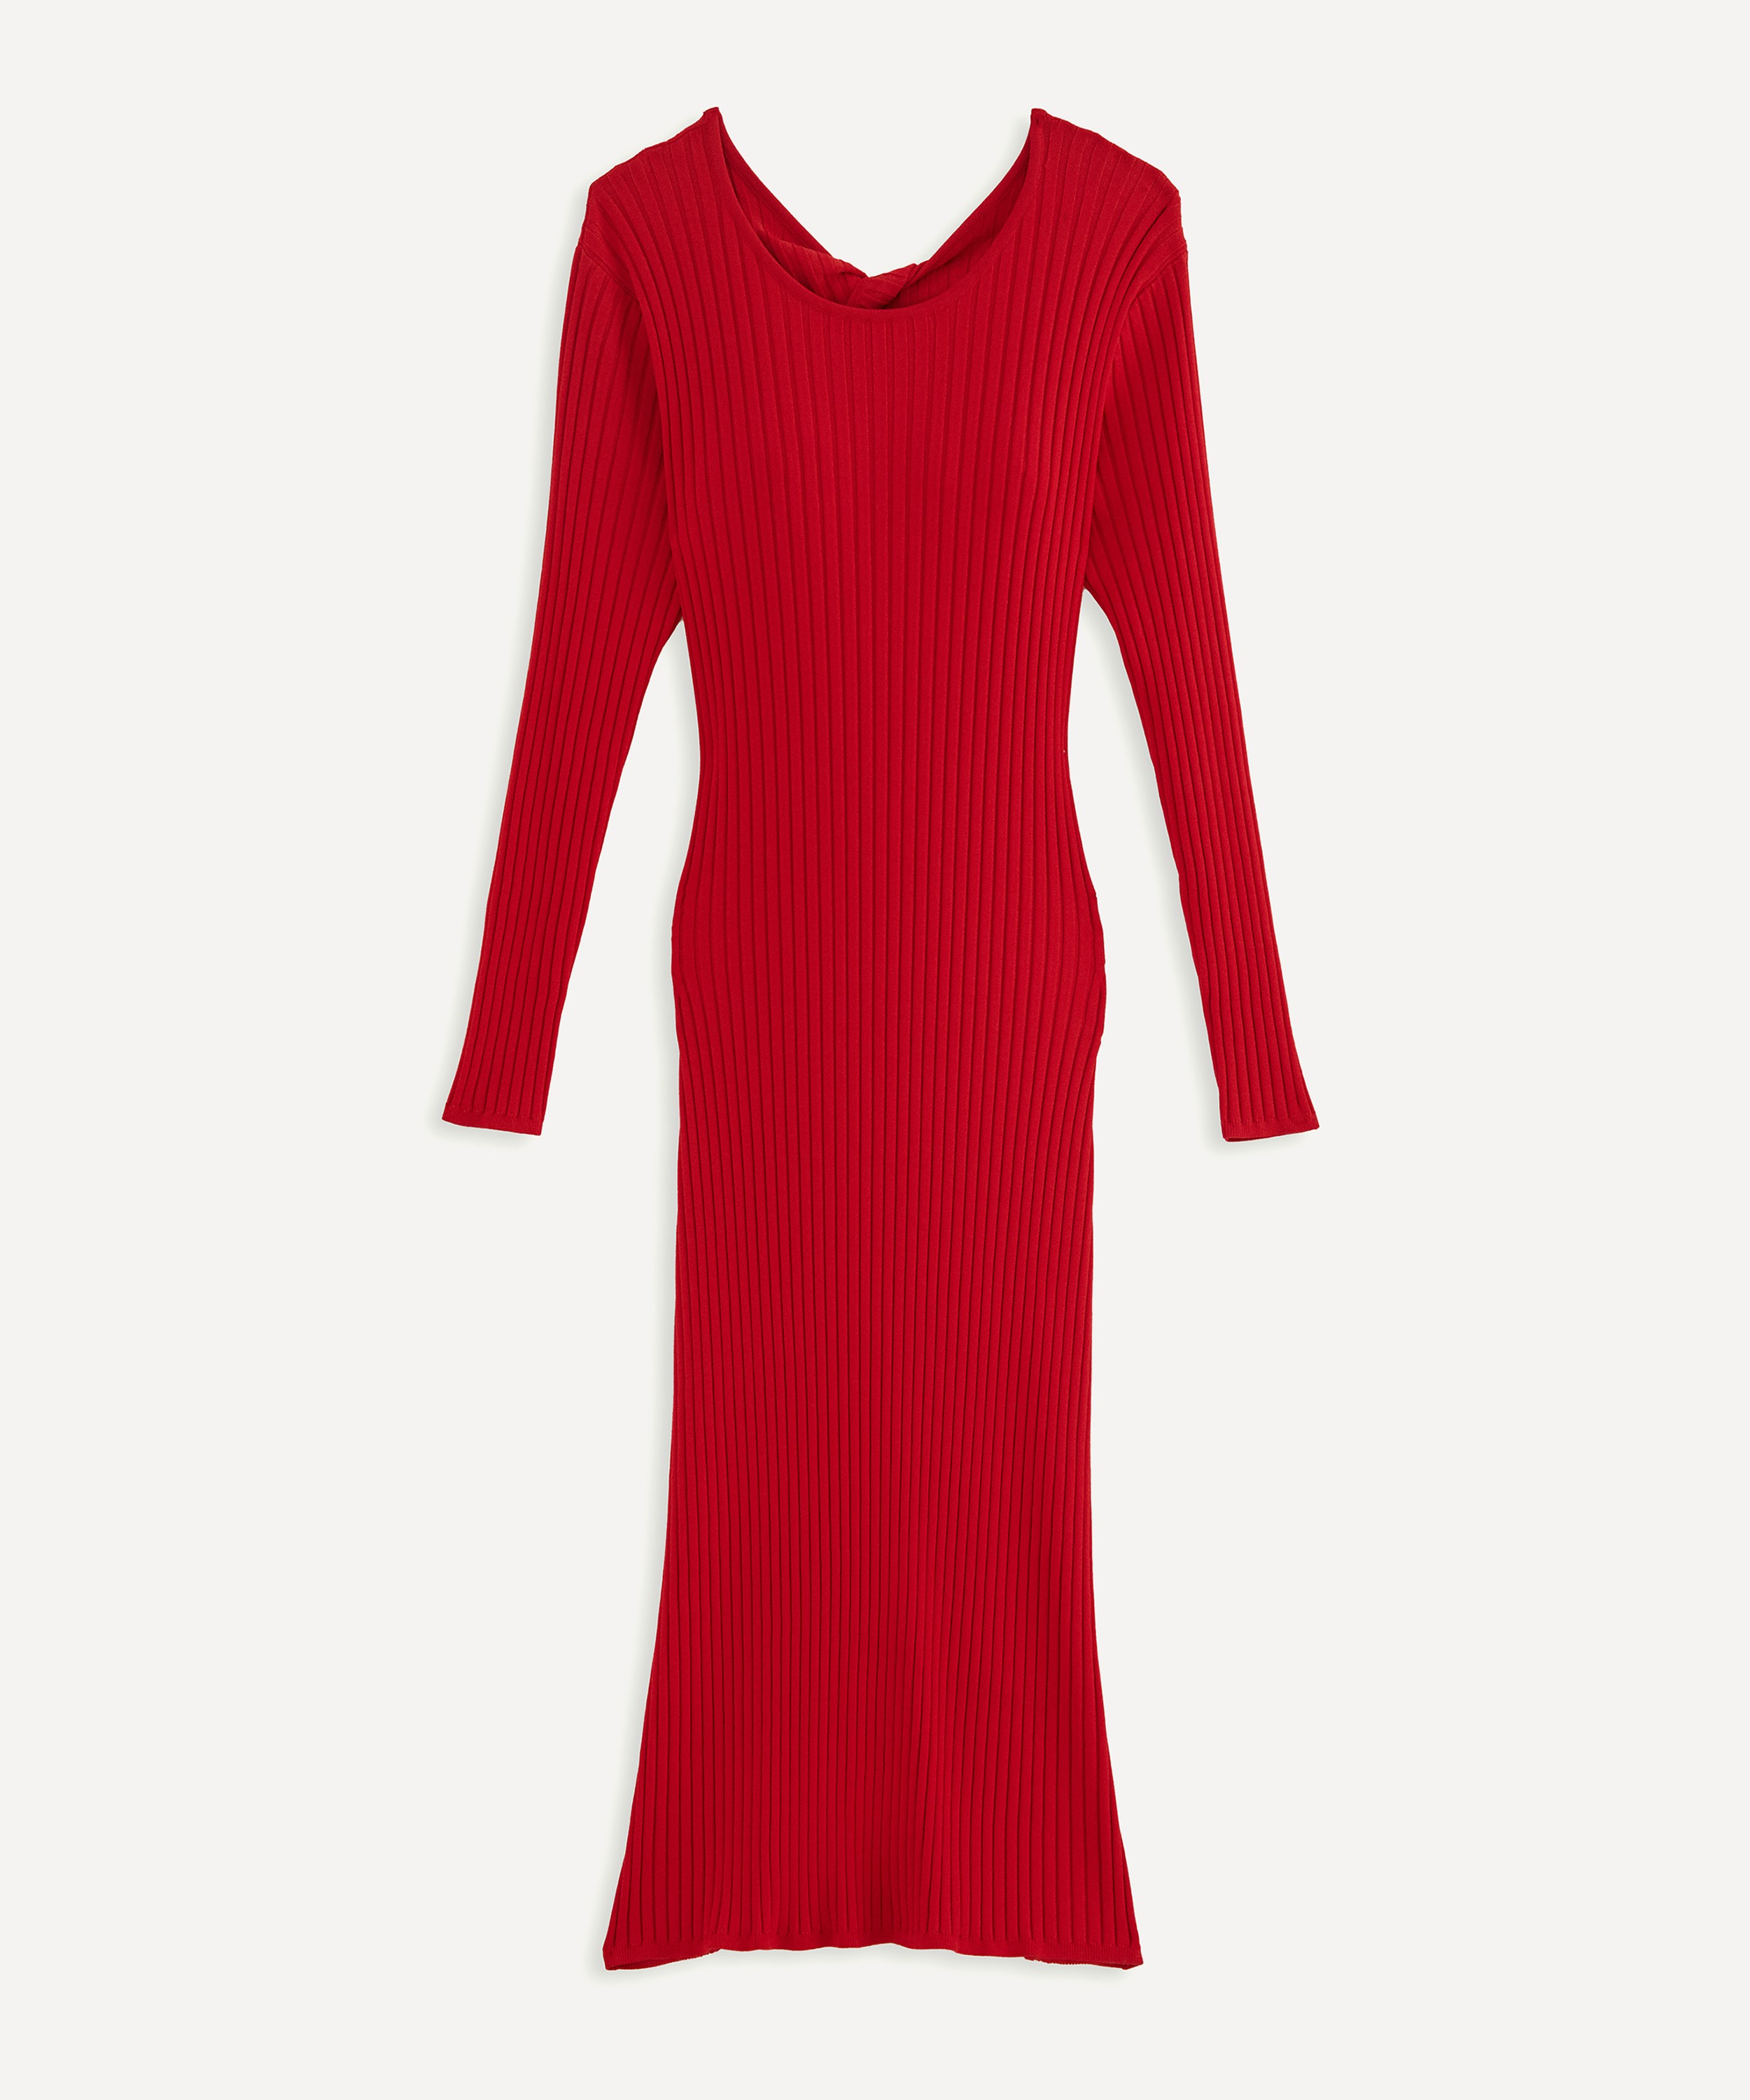 FARM Rio - Red Knit Midi-Dress image number 0